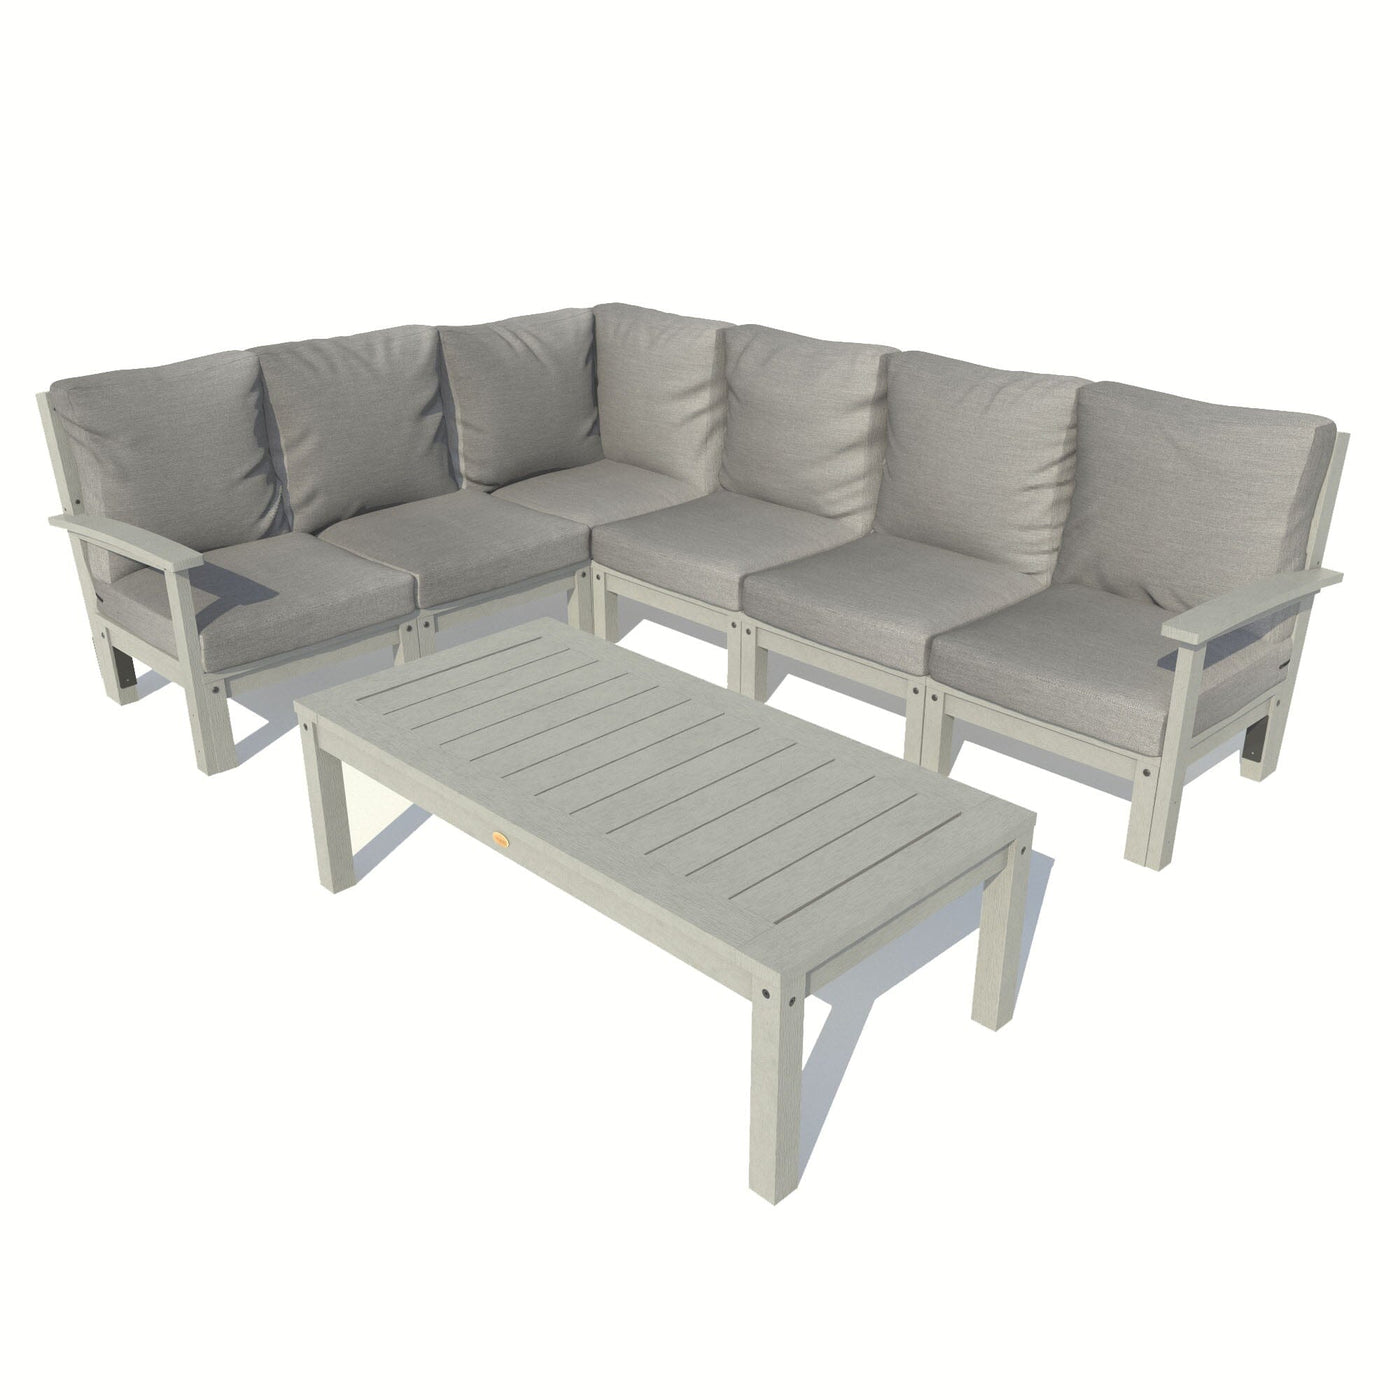 Bespoke Deep Seating: 7 Piece Sectional Sofa Set with Conversation Table Deep Seating Highwood USA Stone Gray Coastal Teak 